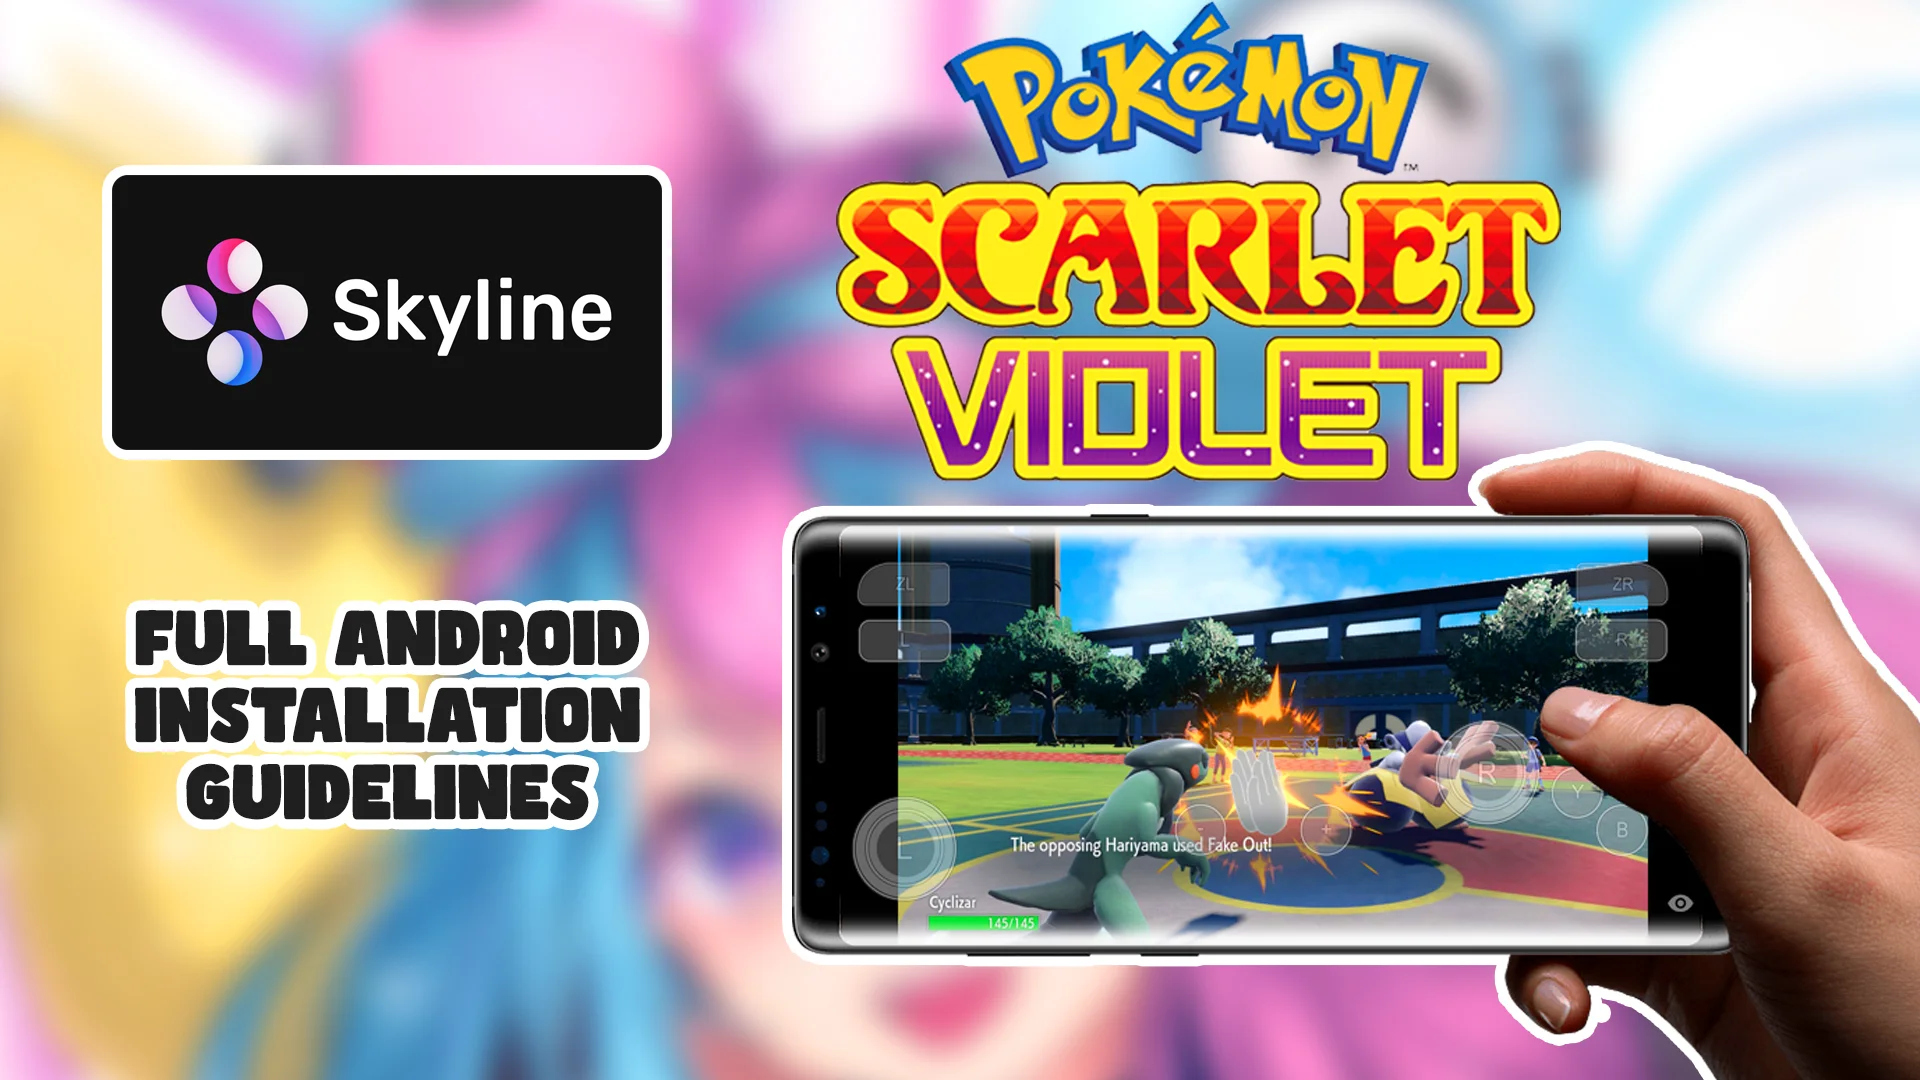 Play Pokémon Scarlet and Violet On Mobile Phone - BiliBili